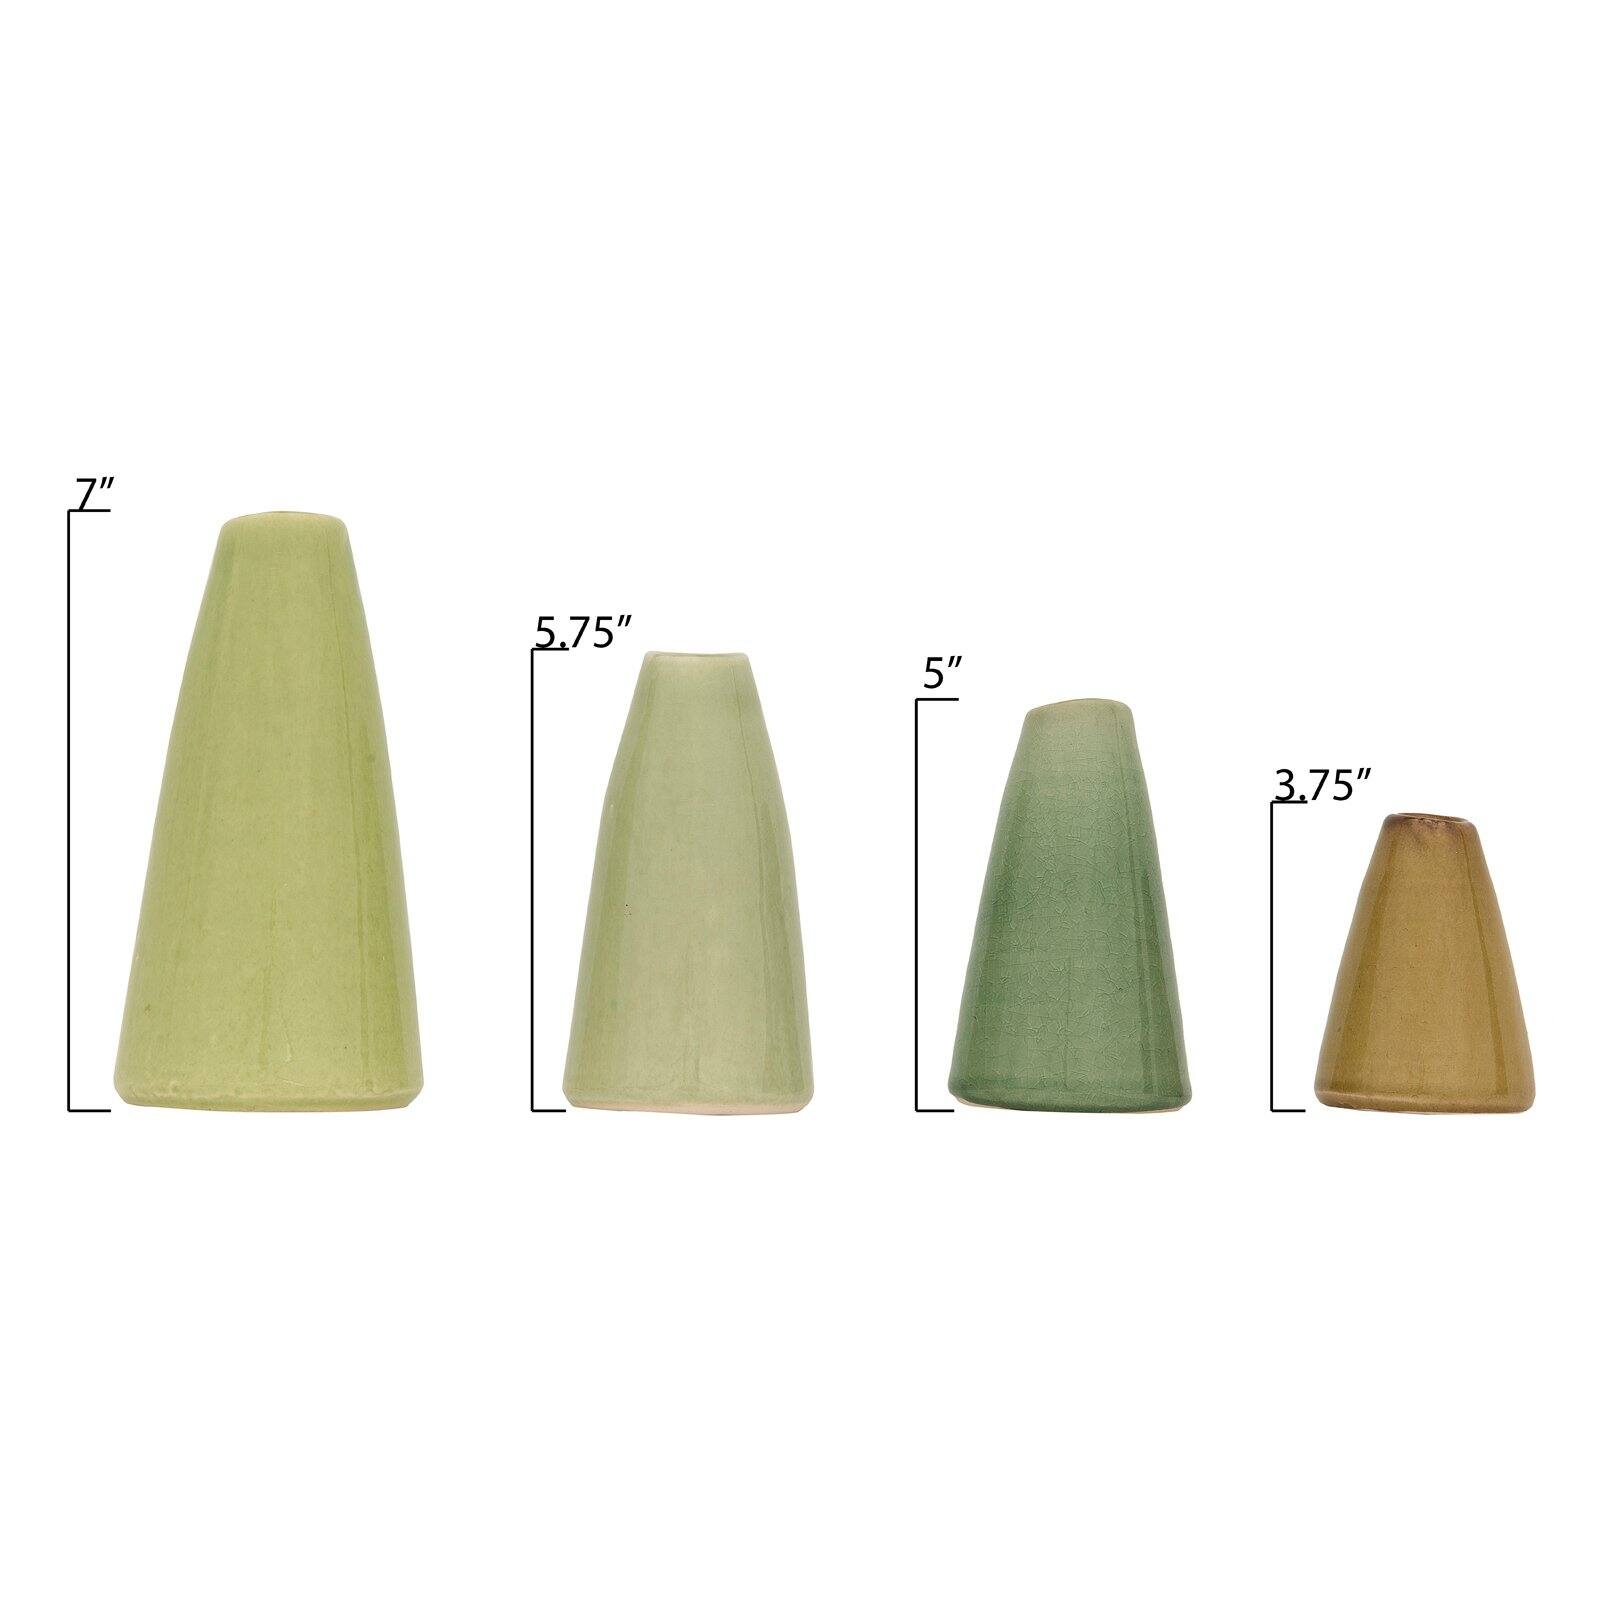 Pistachio Green Terracotta Vases (Set of 4 Sizes) - Image 3